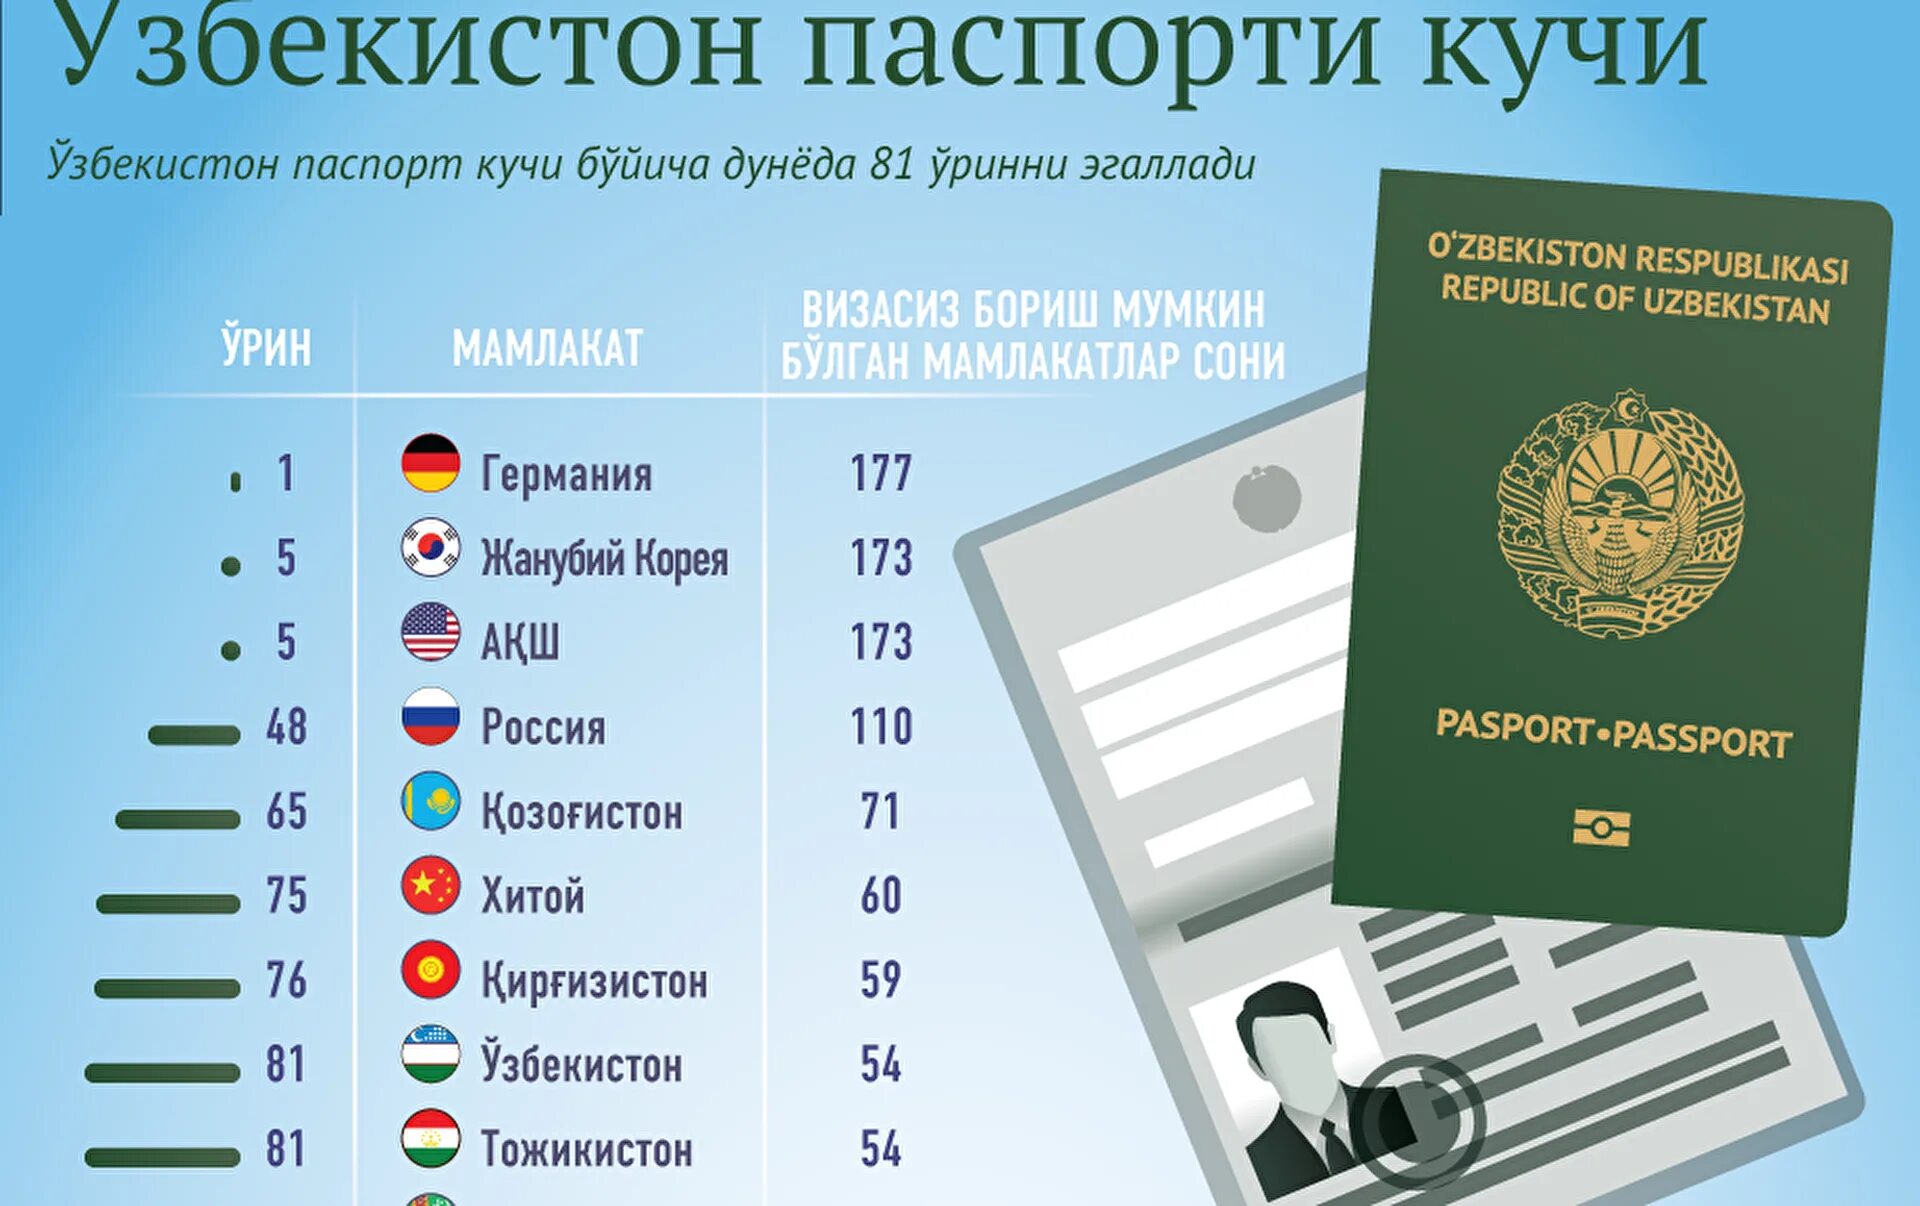 Работа в европе для граждан таджикистана. Виза для граждан Узбекистана. Безвизовые страны для граждан Узбекистана. Визовые требования для граждан Узбекистана.